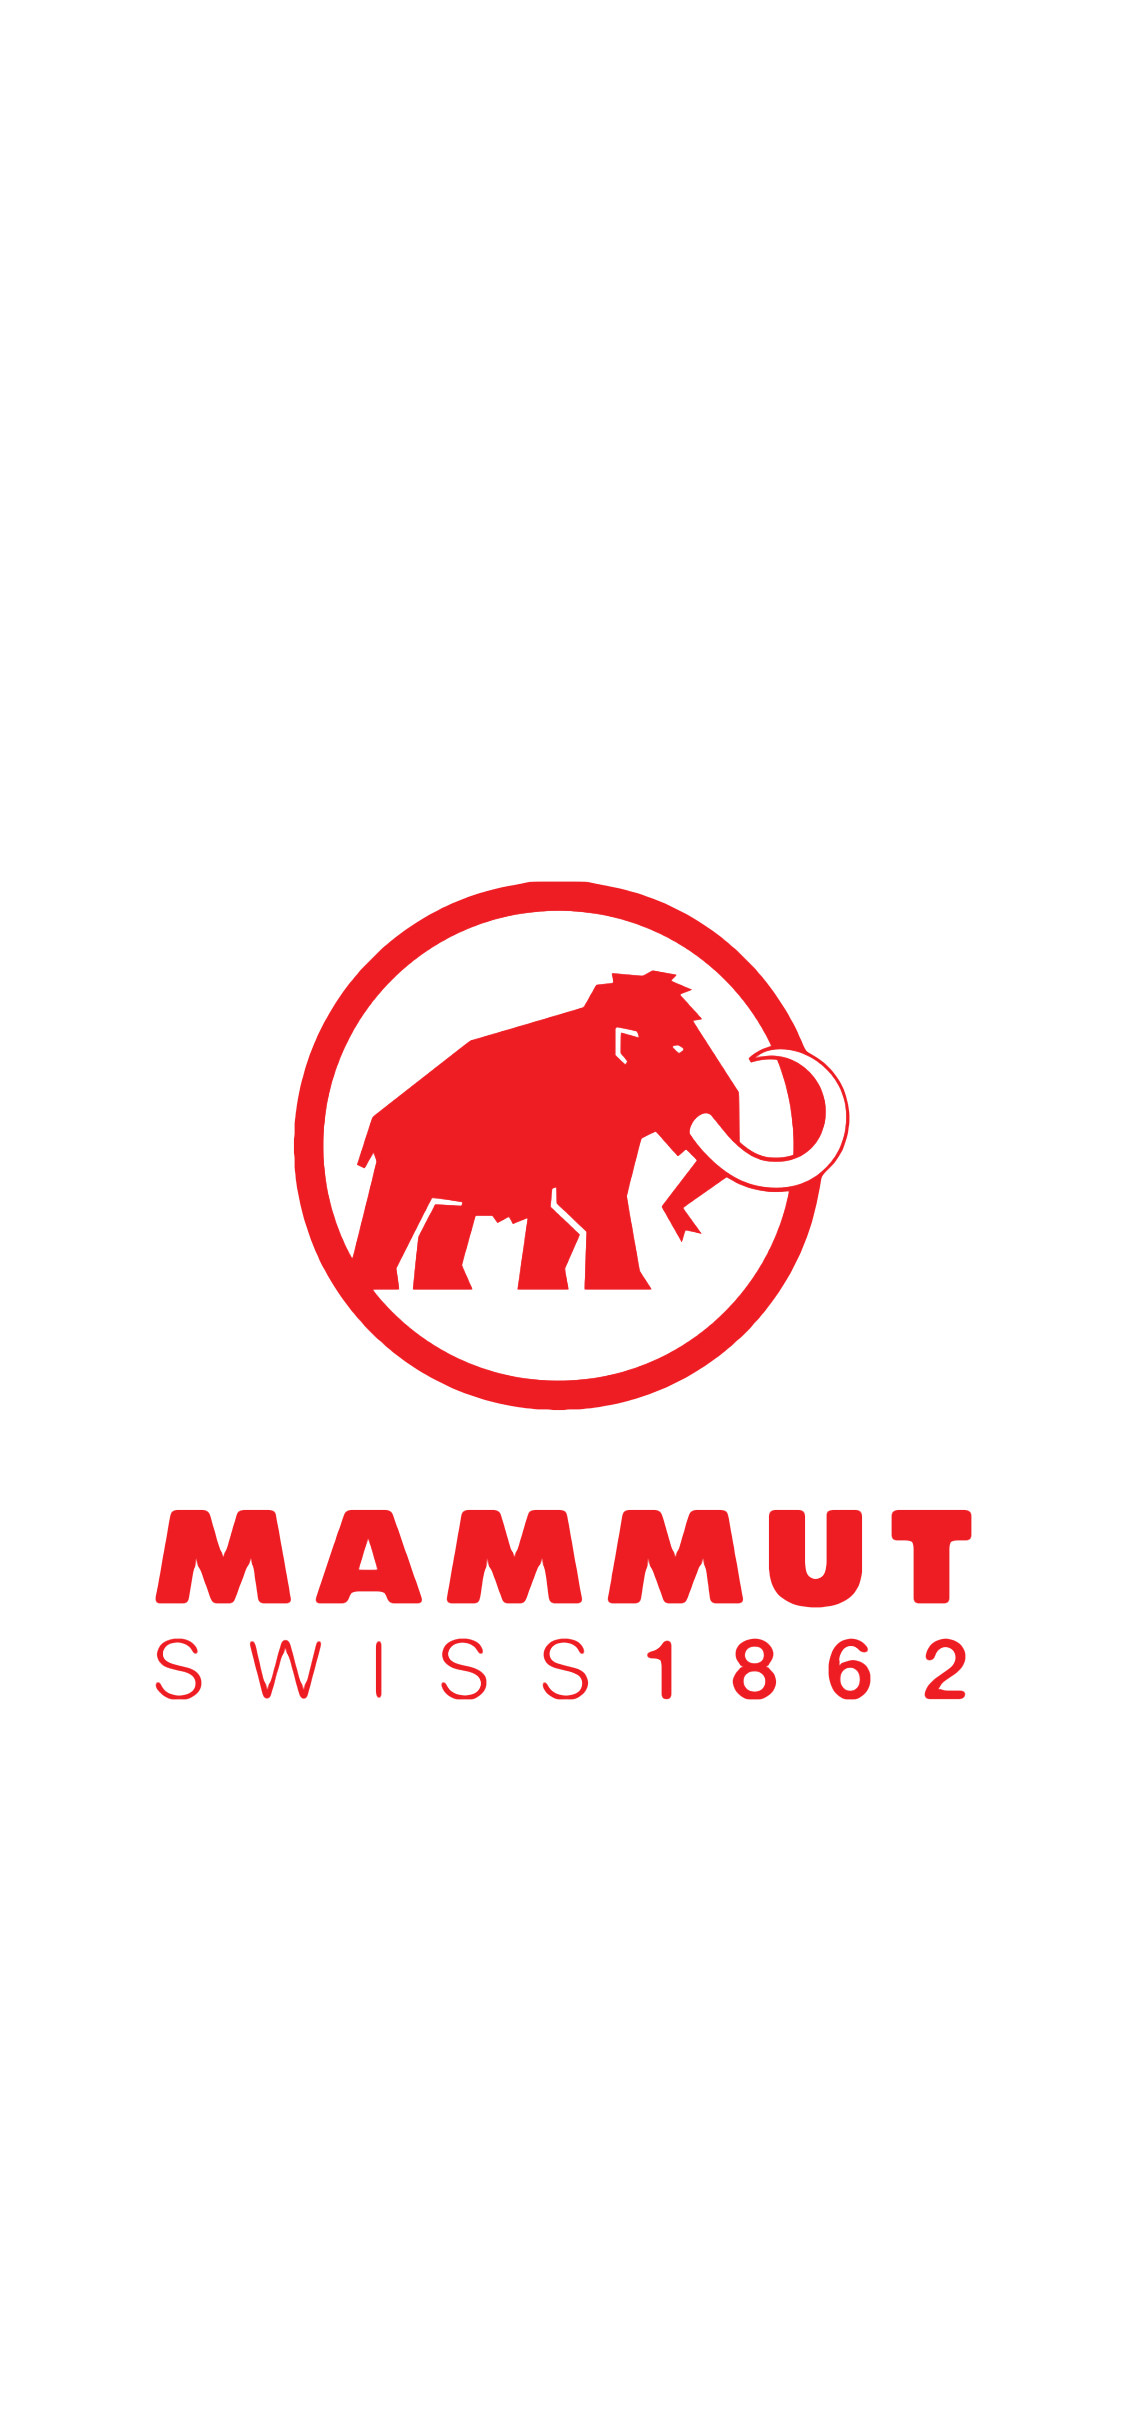 mammut01 - マムートの無料高画質スマホ壁紙14枚 [iPhone＆Androidに対応]